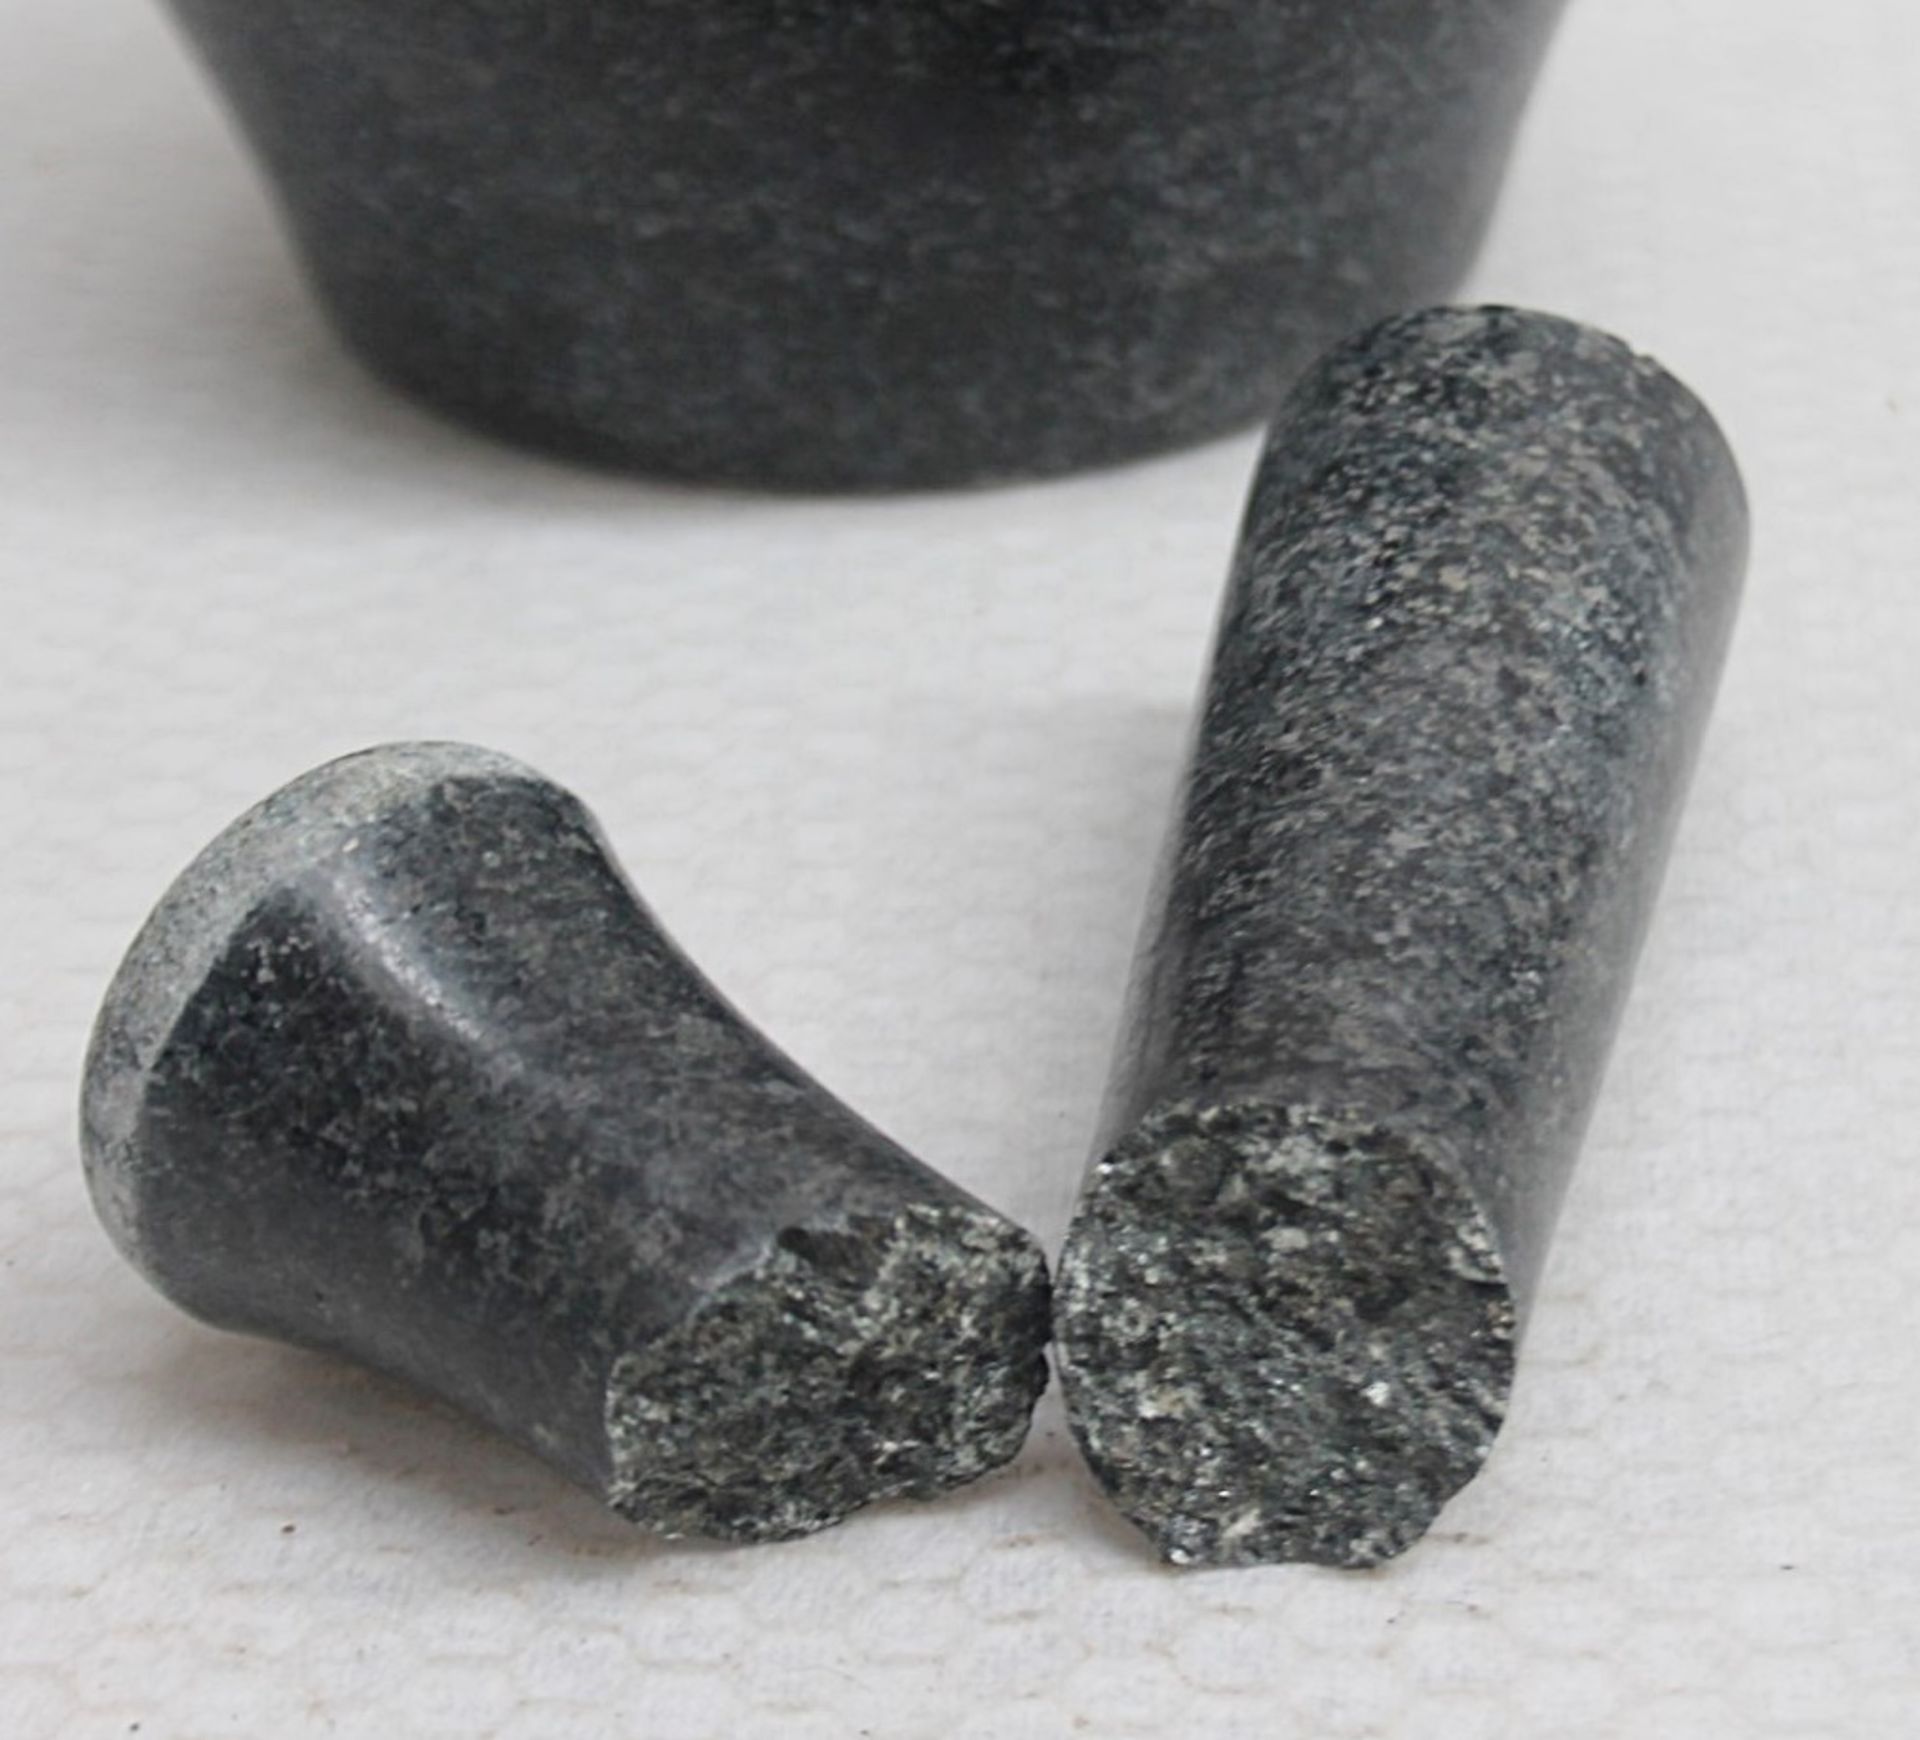 1 x COLE & MASON Granite Pestle & Mortar 18cm, Black - Unused Boxed Stock - Ref: 3310048/HAS2103/ - Image 4 of 8